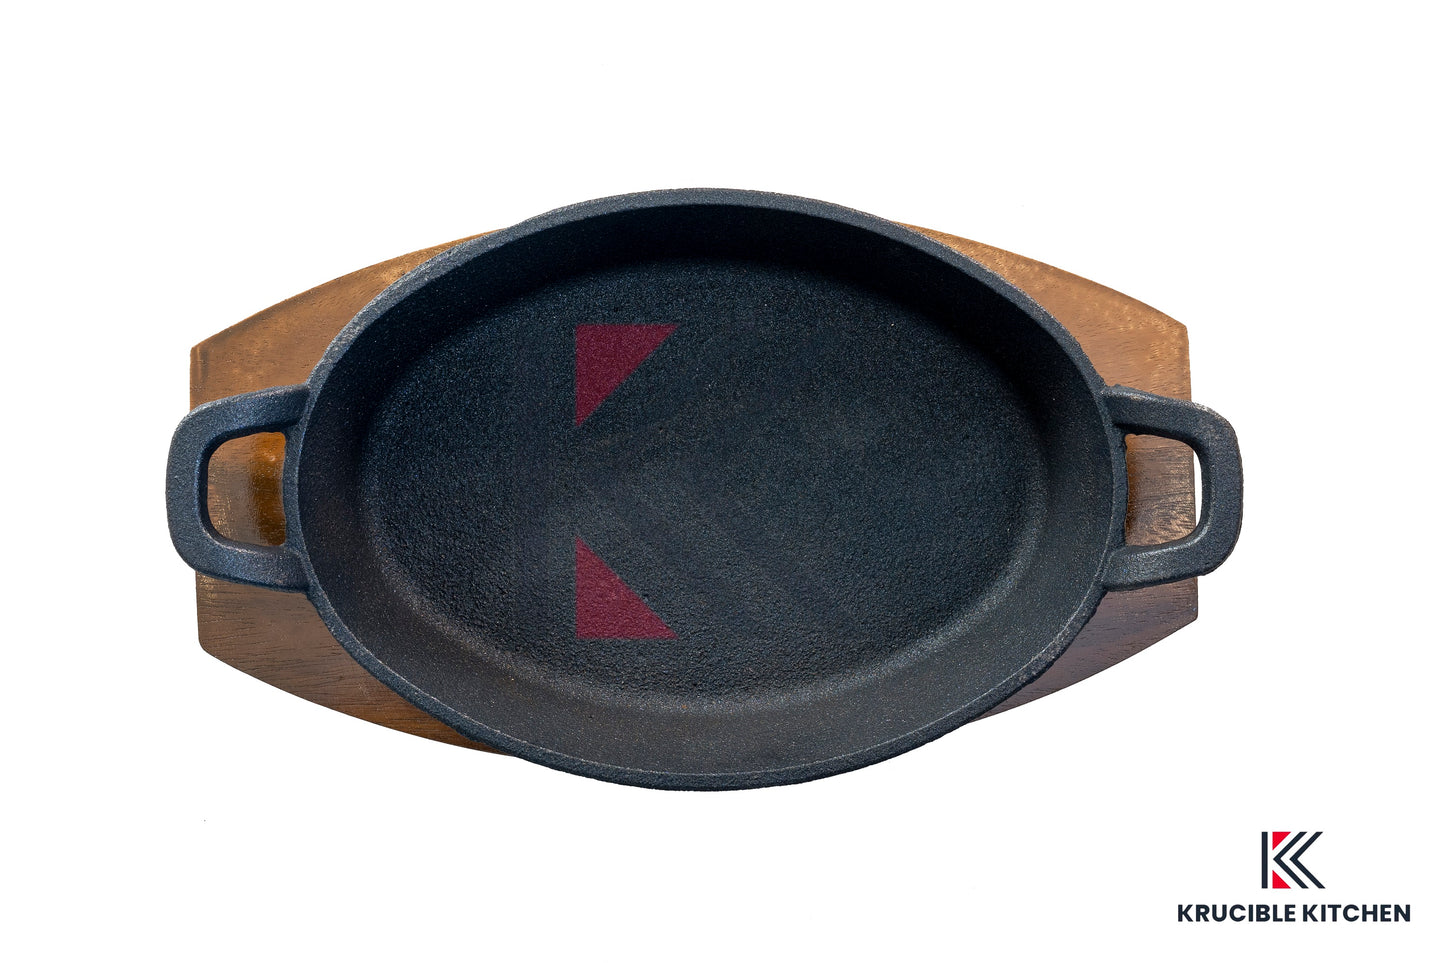 Krucible Kitchen Cast Iron Sizzler 9" Hotplate Naturally Non Stick Seasoned